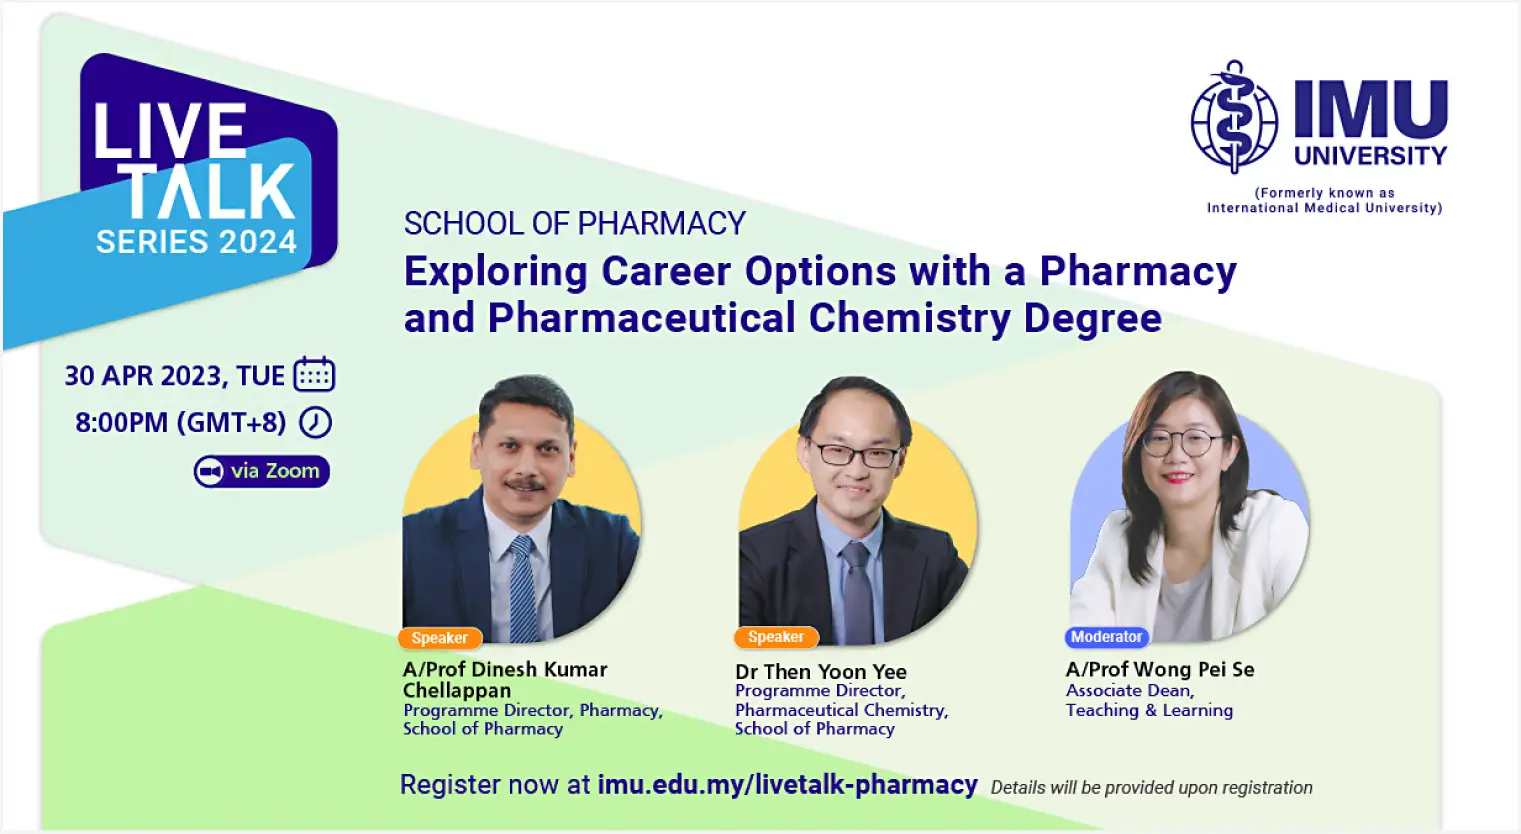 unlock-career-opportunities-pharmacy-field-imu-university-live-talk-series-2024